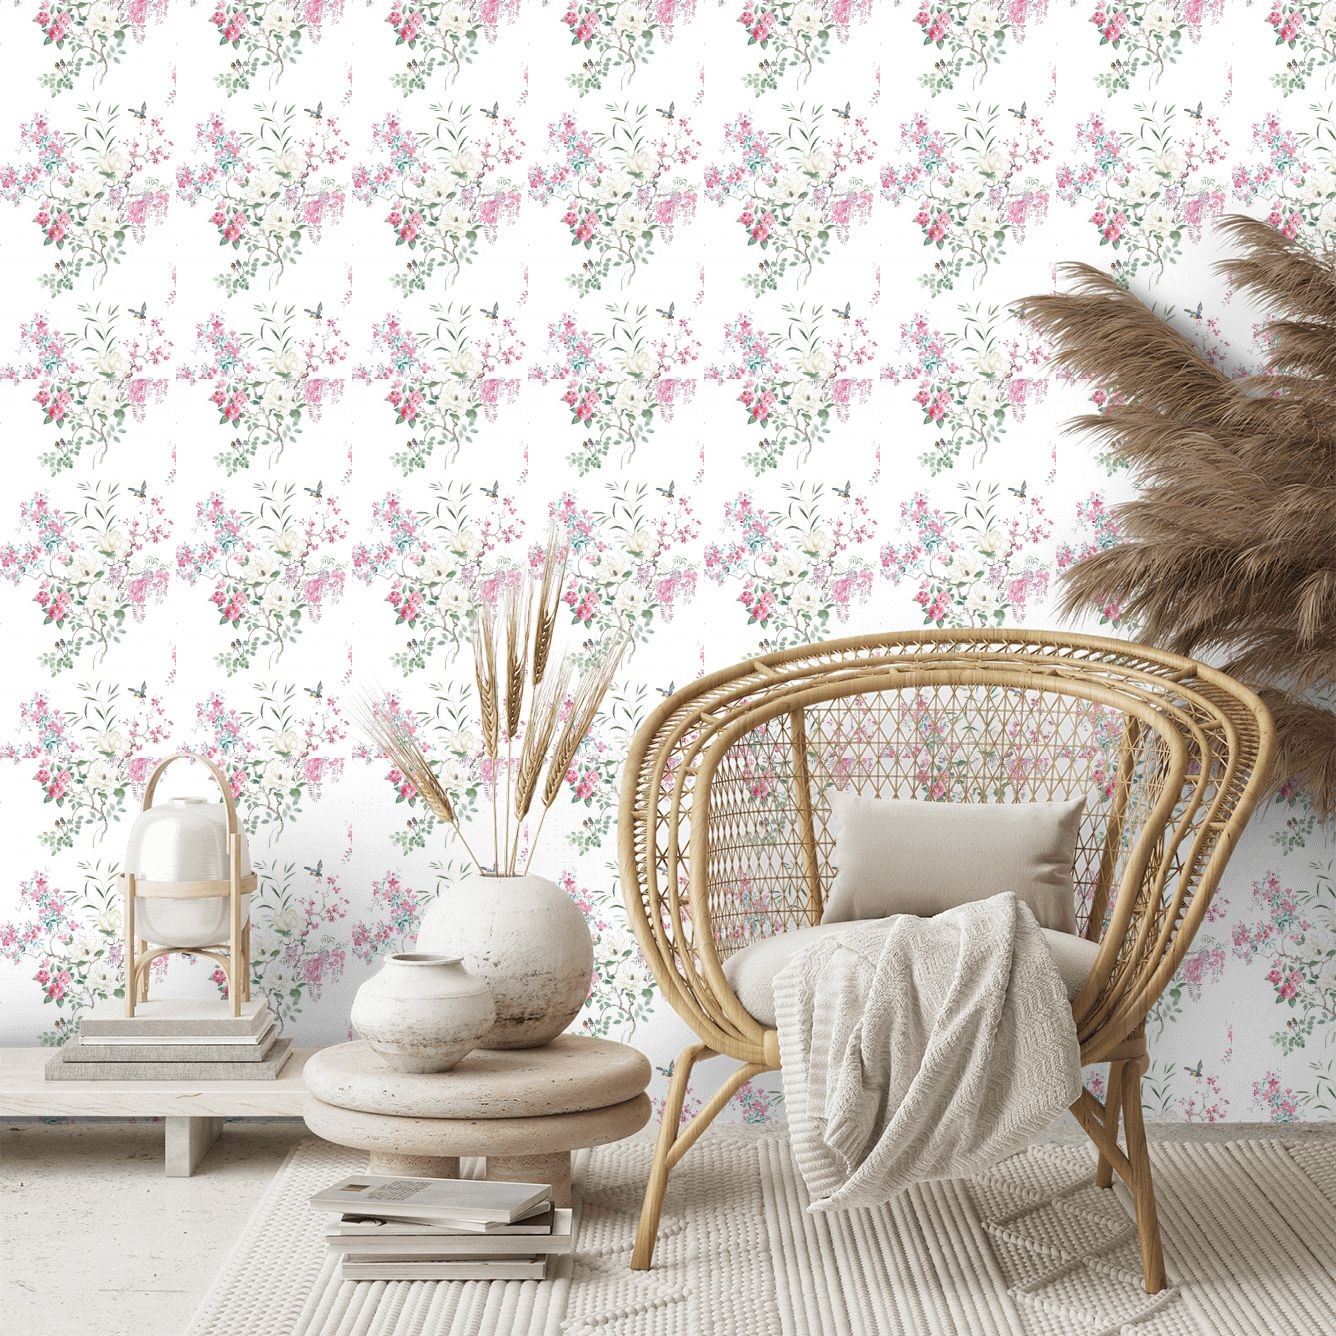 Wisteria & Blossom Panel B Wallpaper - Blossom/Leaf - By Sanderson - 216306